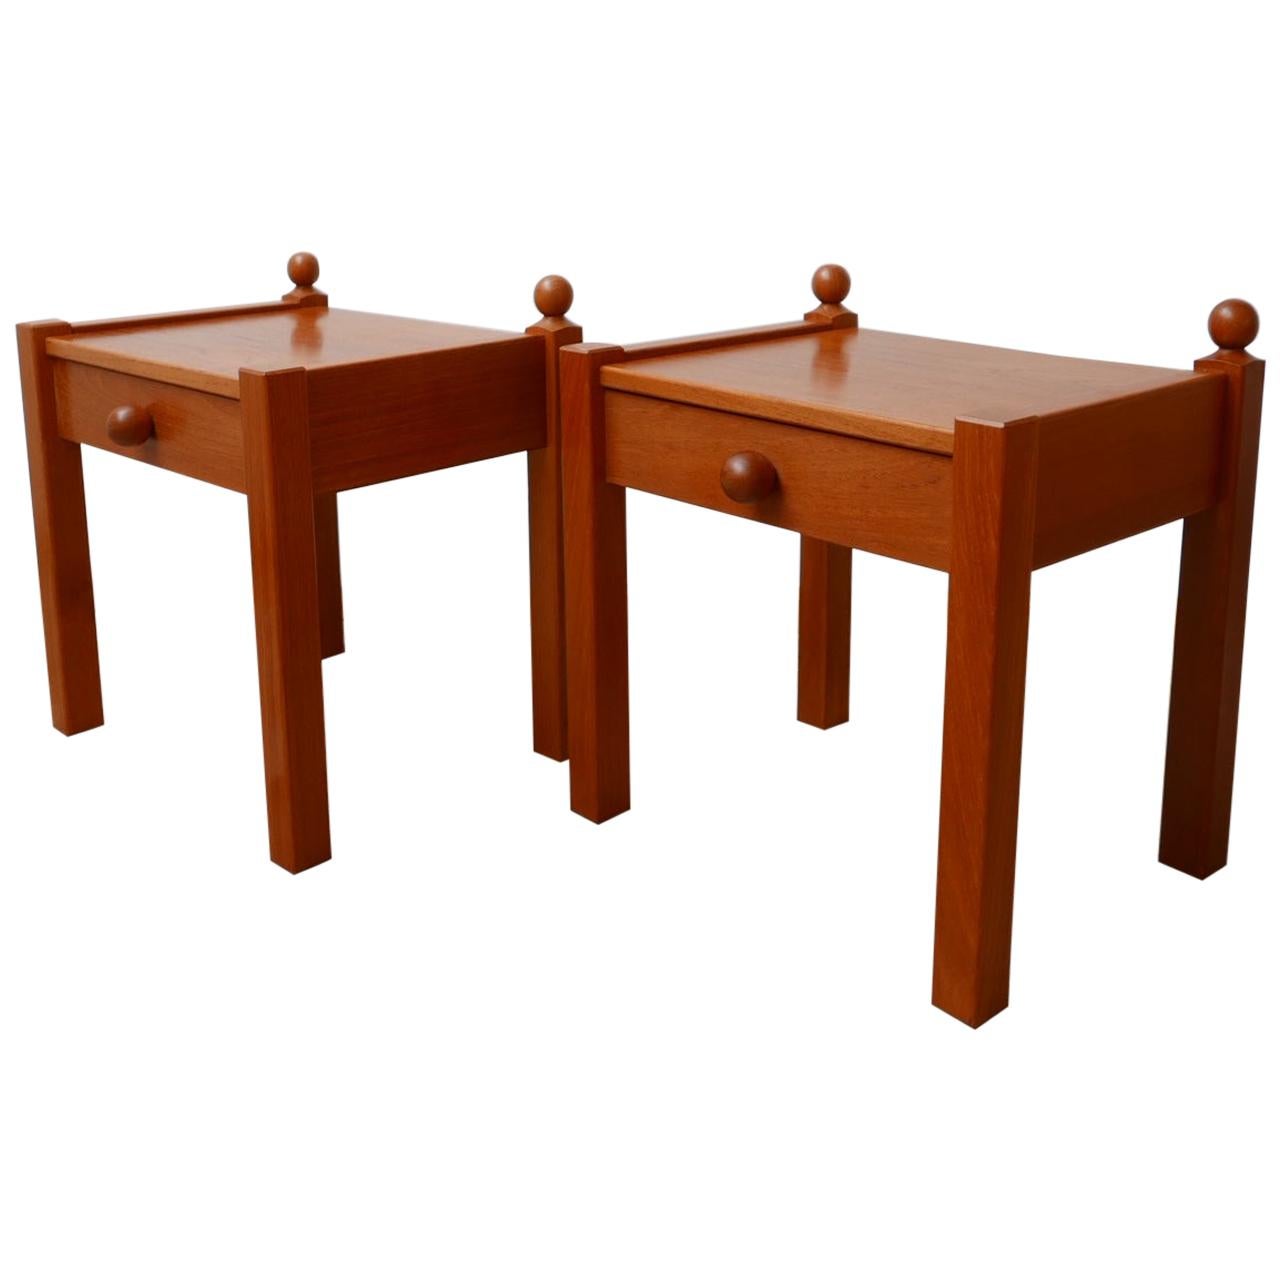 Pair of Modernist Midcentury Bedside Tables or Side Tables